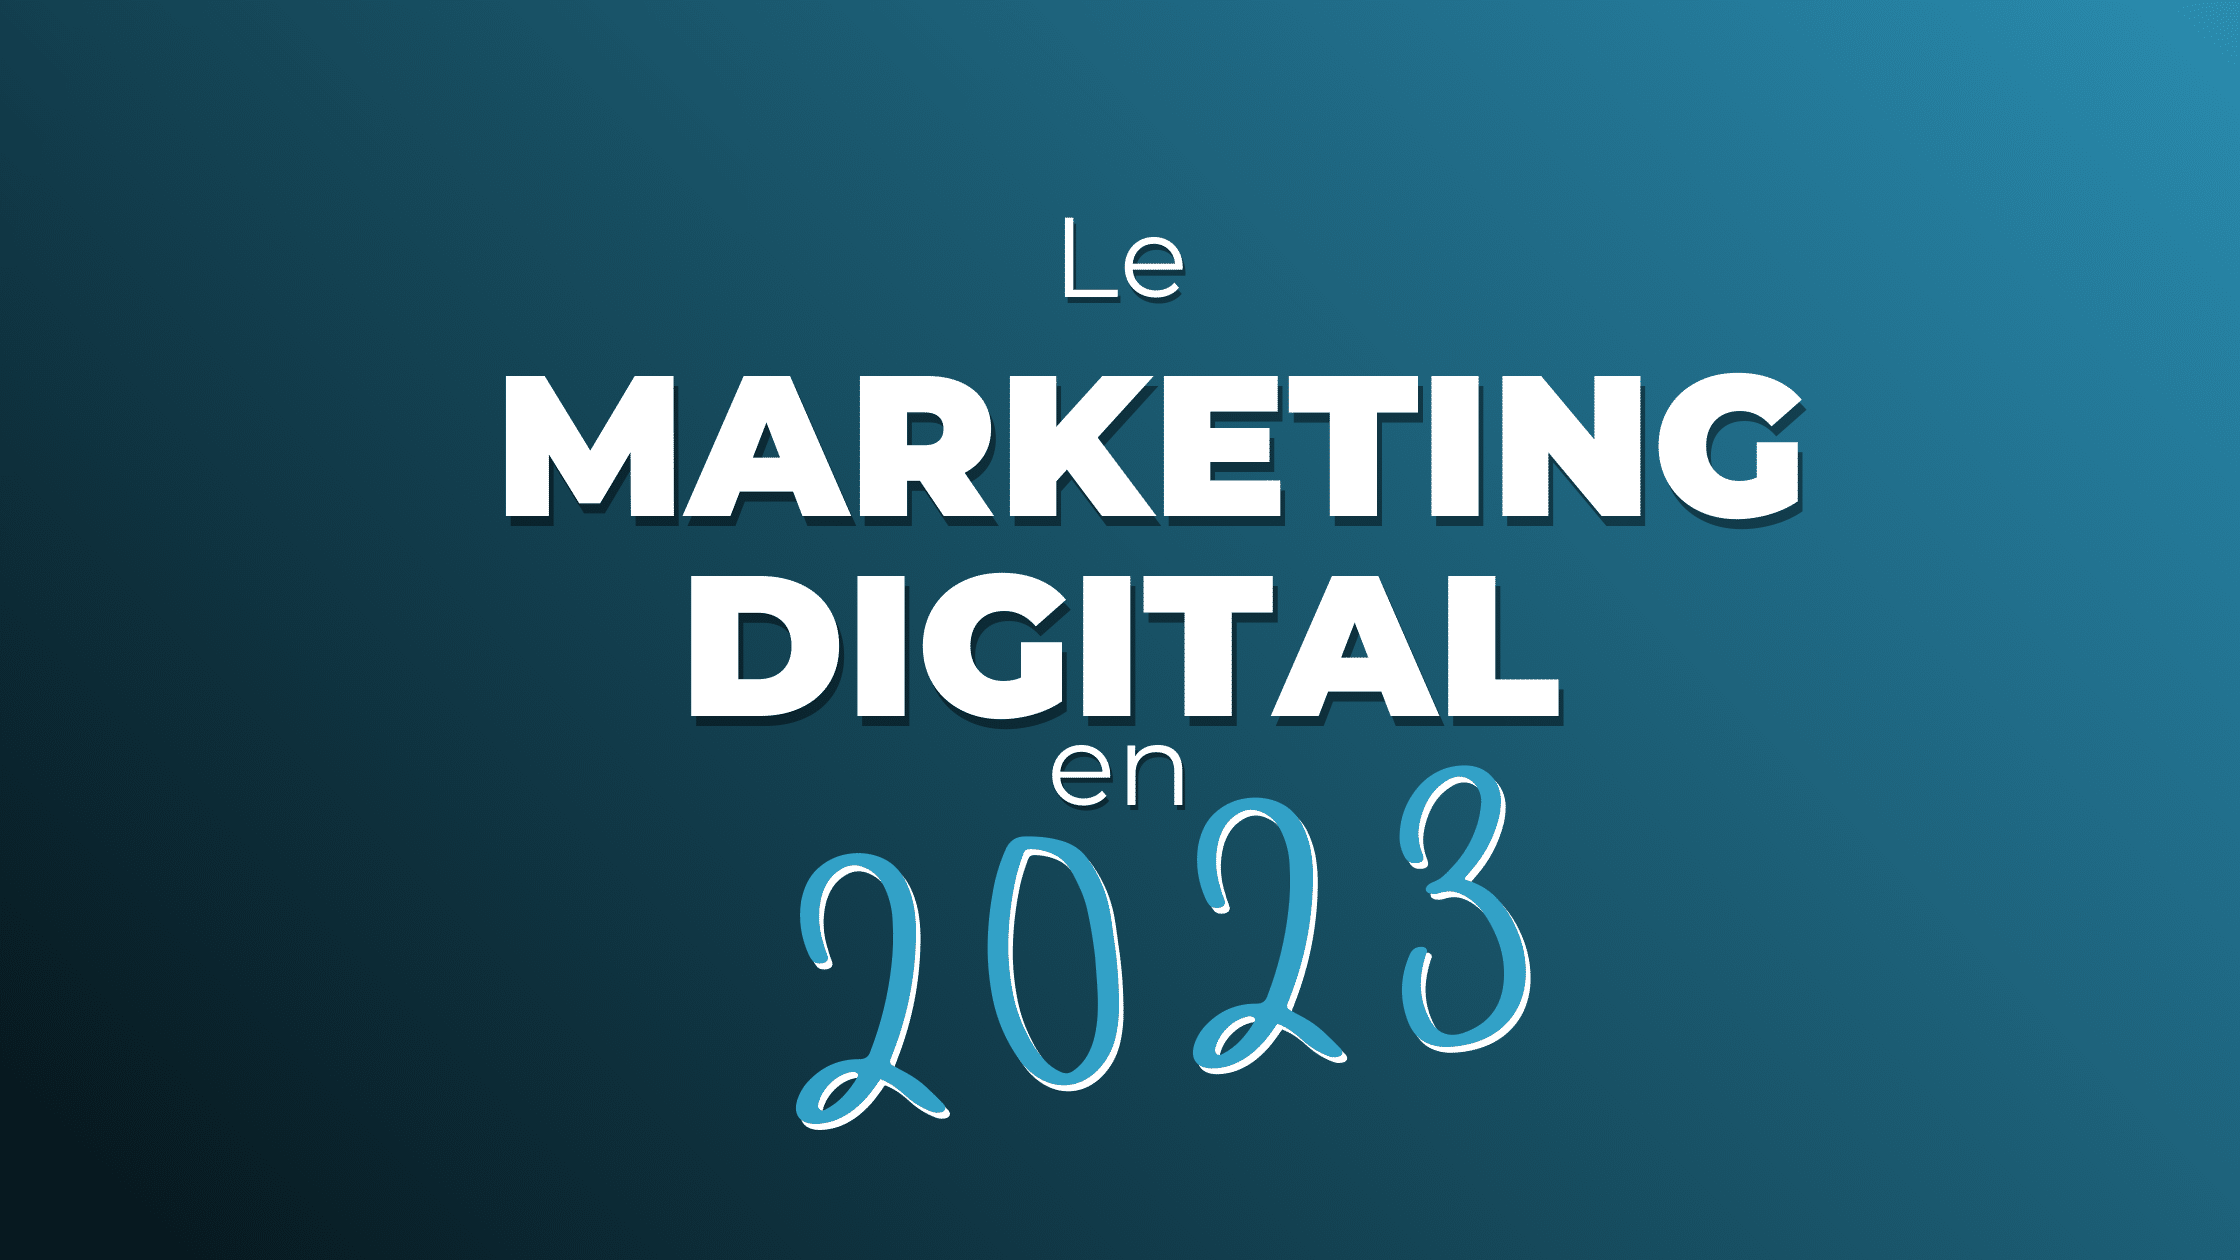 Le marketing digital en 2023